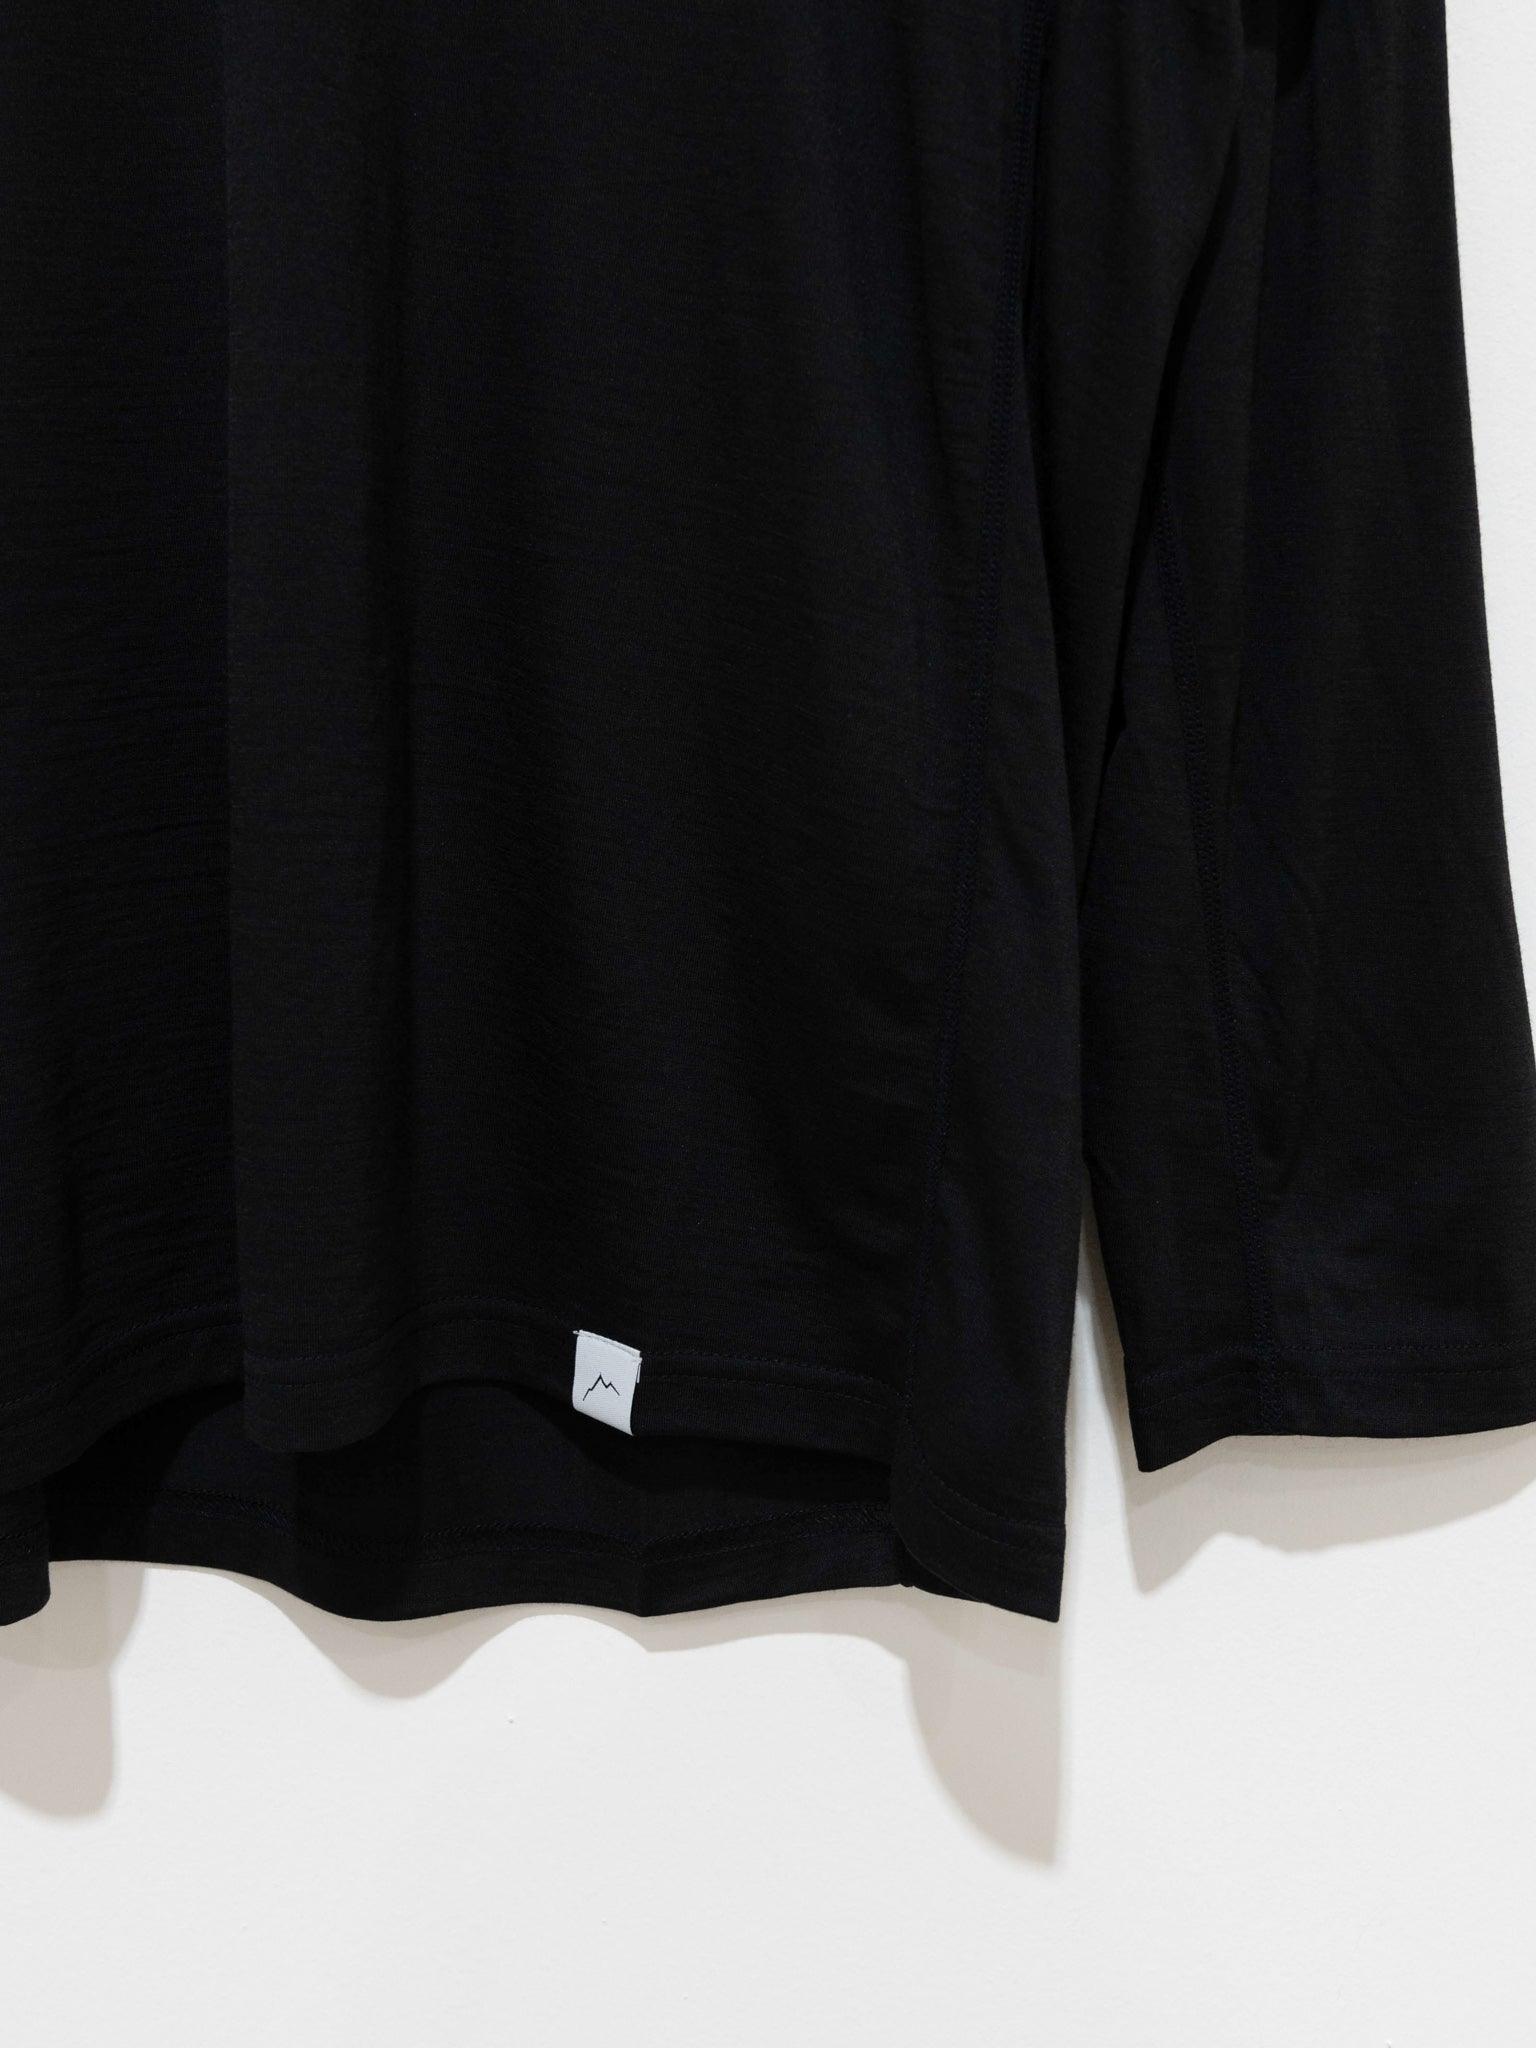 Namu Shop - CAYL Merino Blend Long Sleeve - Black